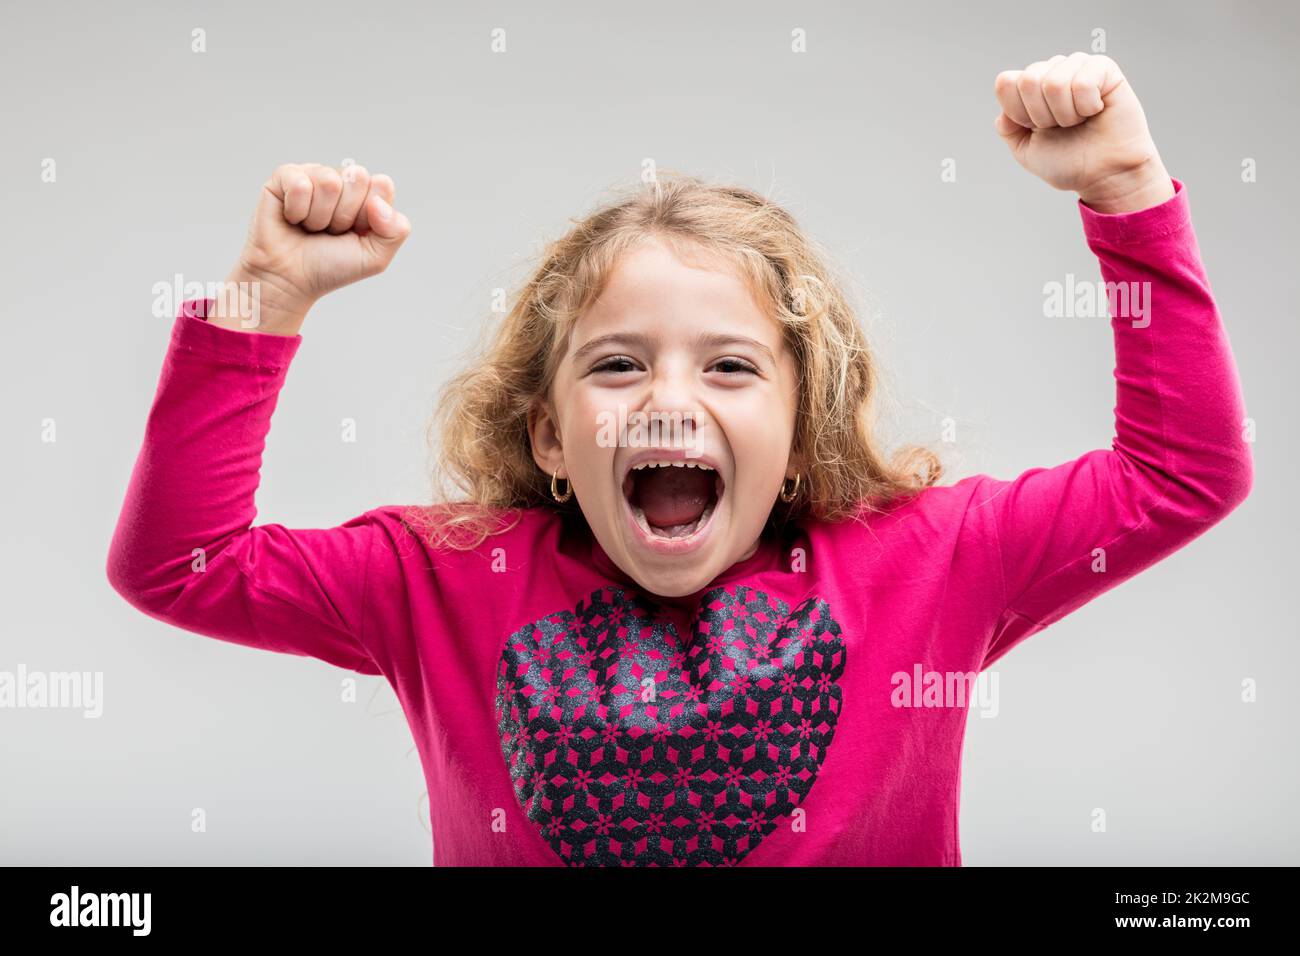 Laughing young schoolgirl raising hands Stock Photo